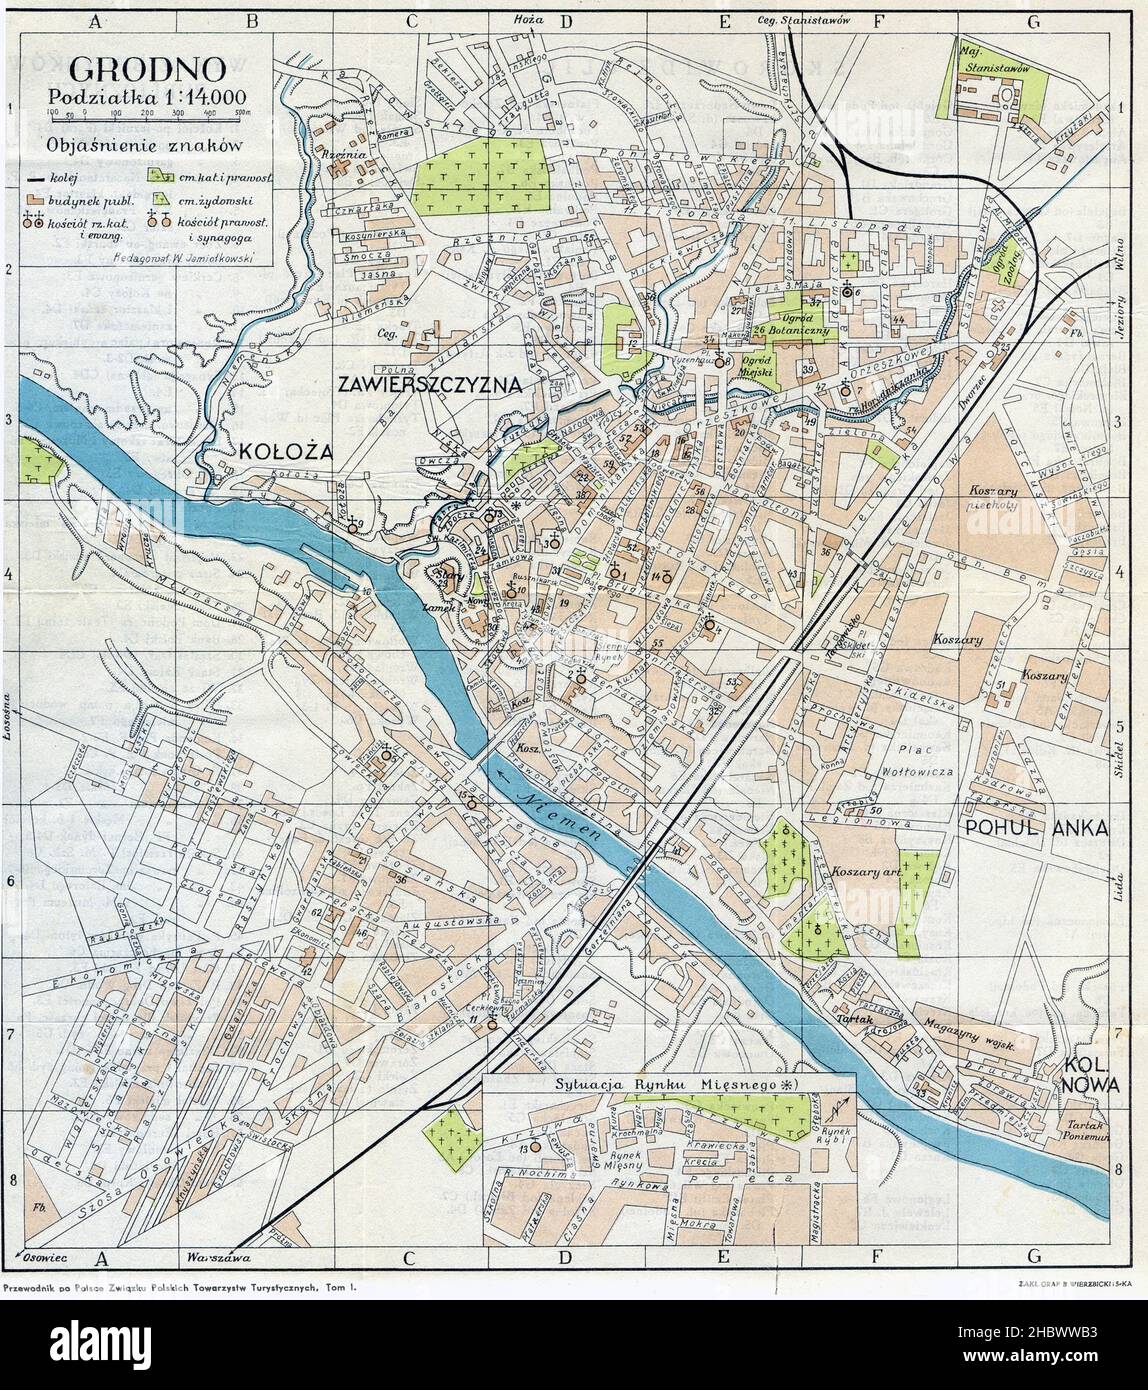 Grodno Map, Map of Grodno, Grodno Print, Grodno Maps, Old Map of Grodno, Retro Grodno Map, Belarus Map, Map of Belarus, Grodno City, Grodno Print Stock Photo